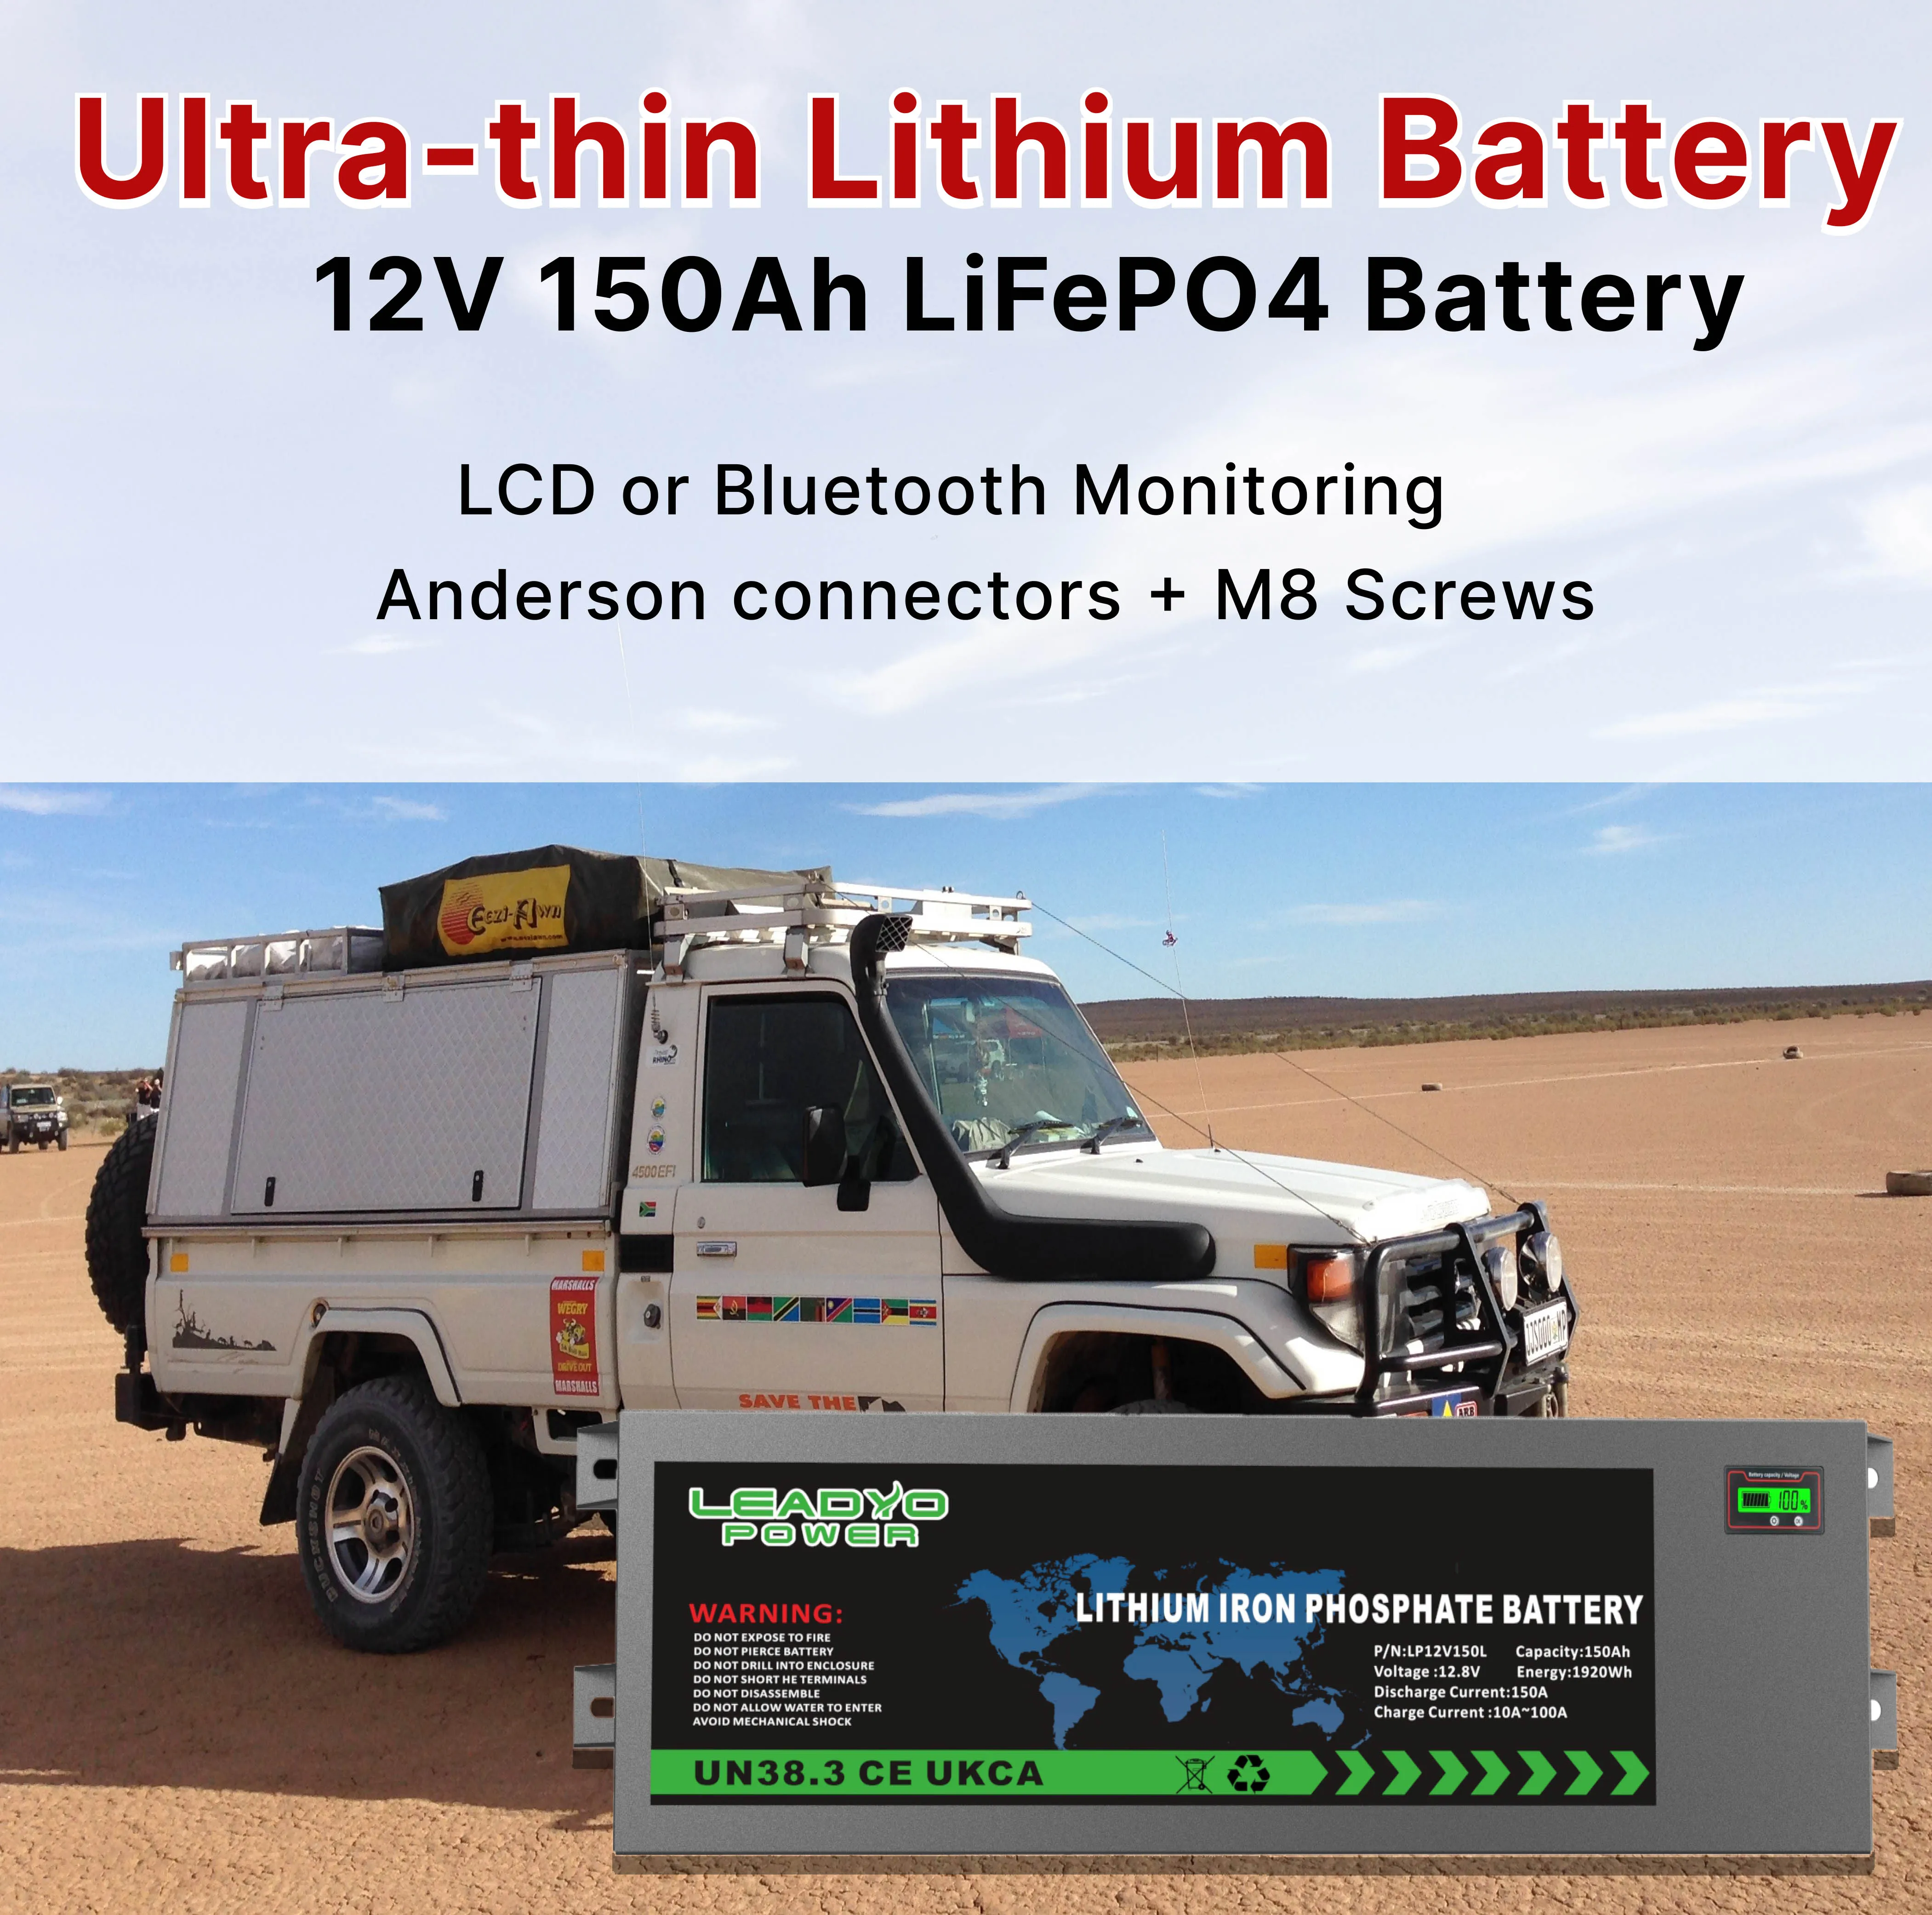 12V 150Ah Slim line Ultra-thin Lithium LiFePO4 Battery details